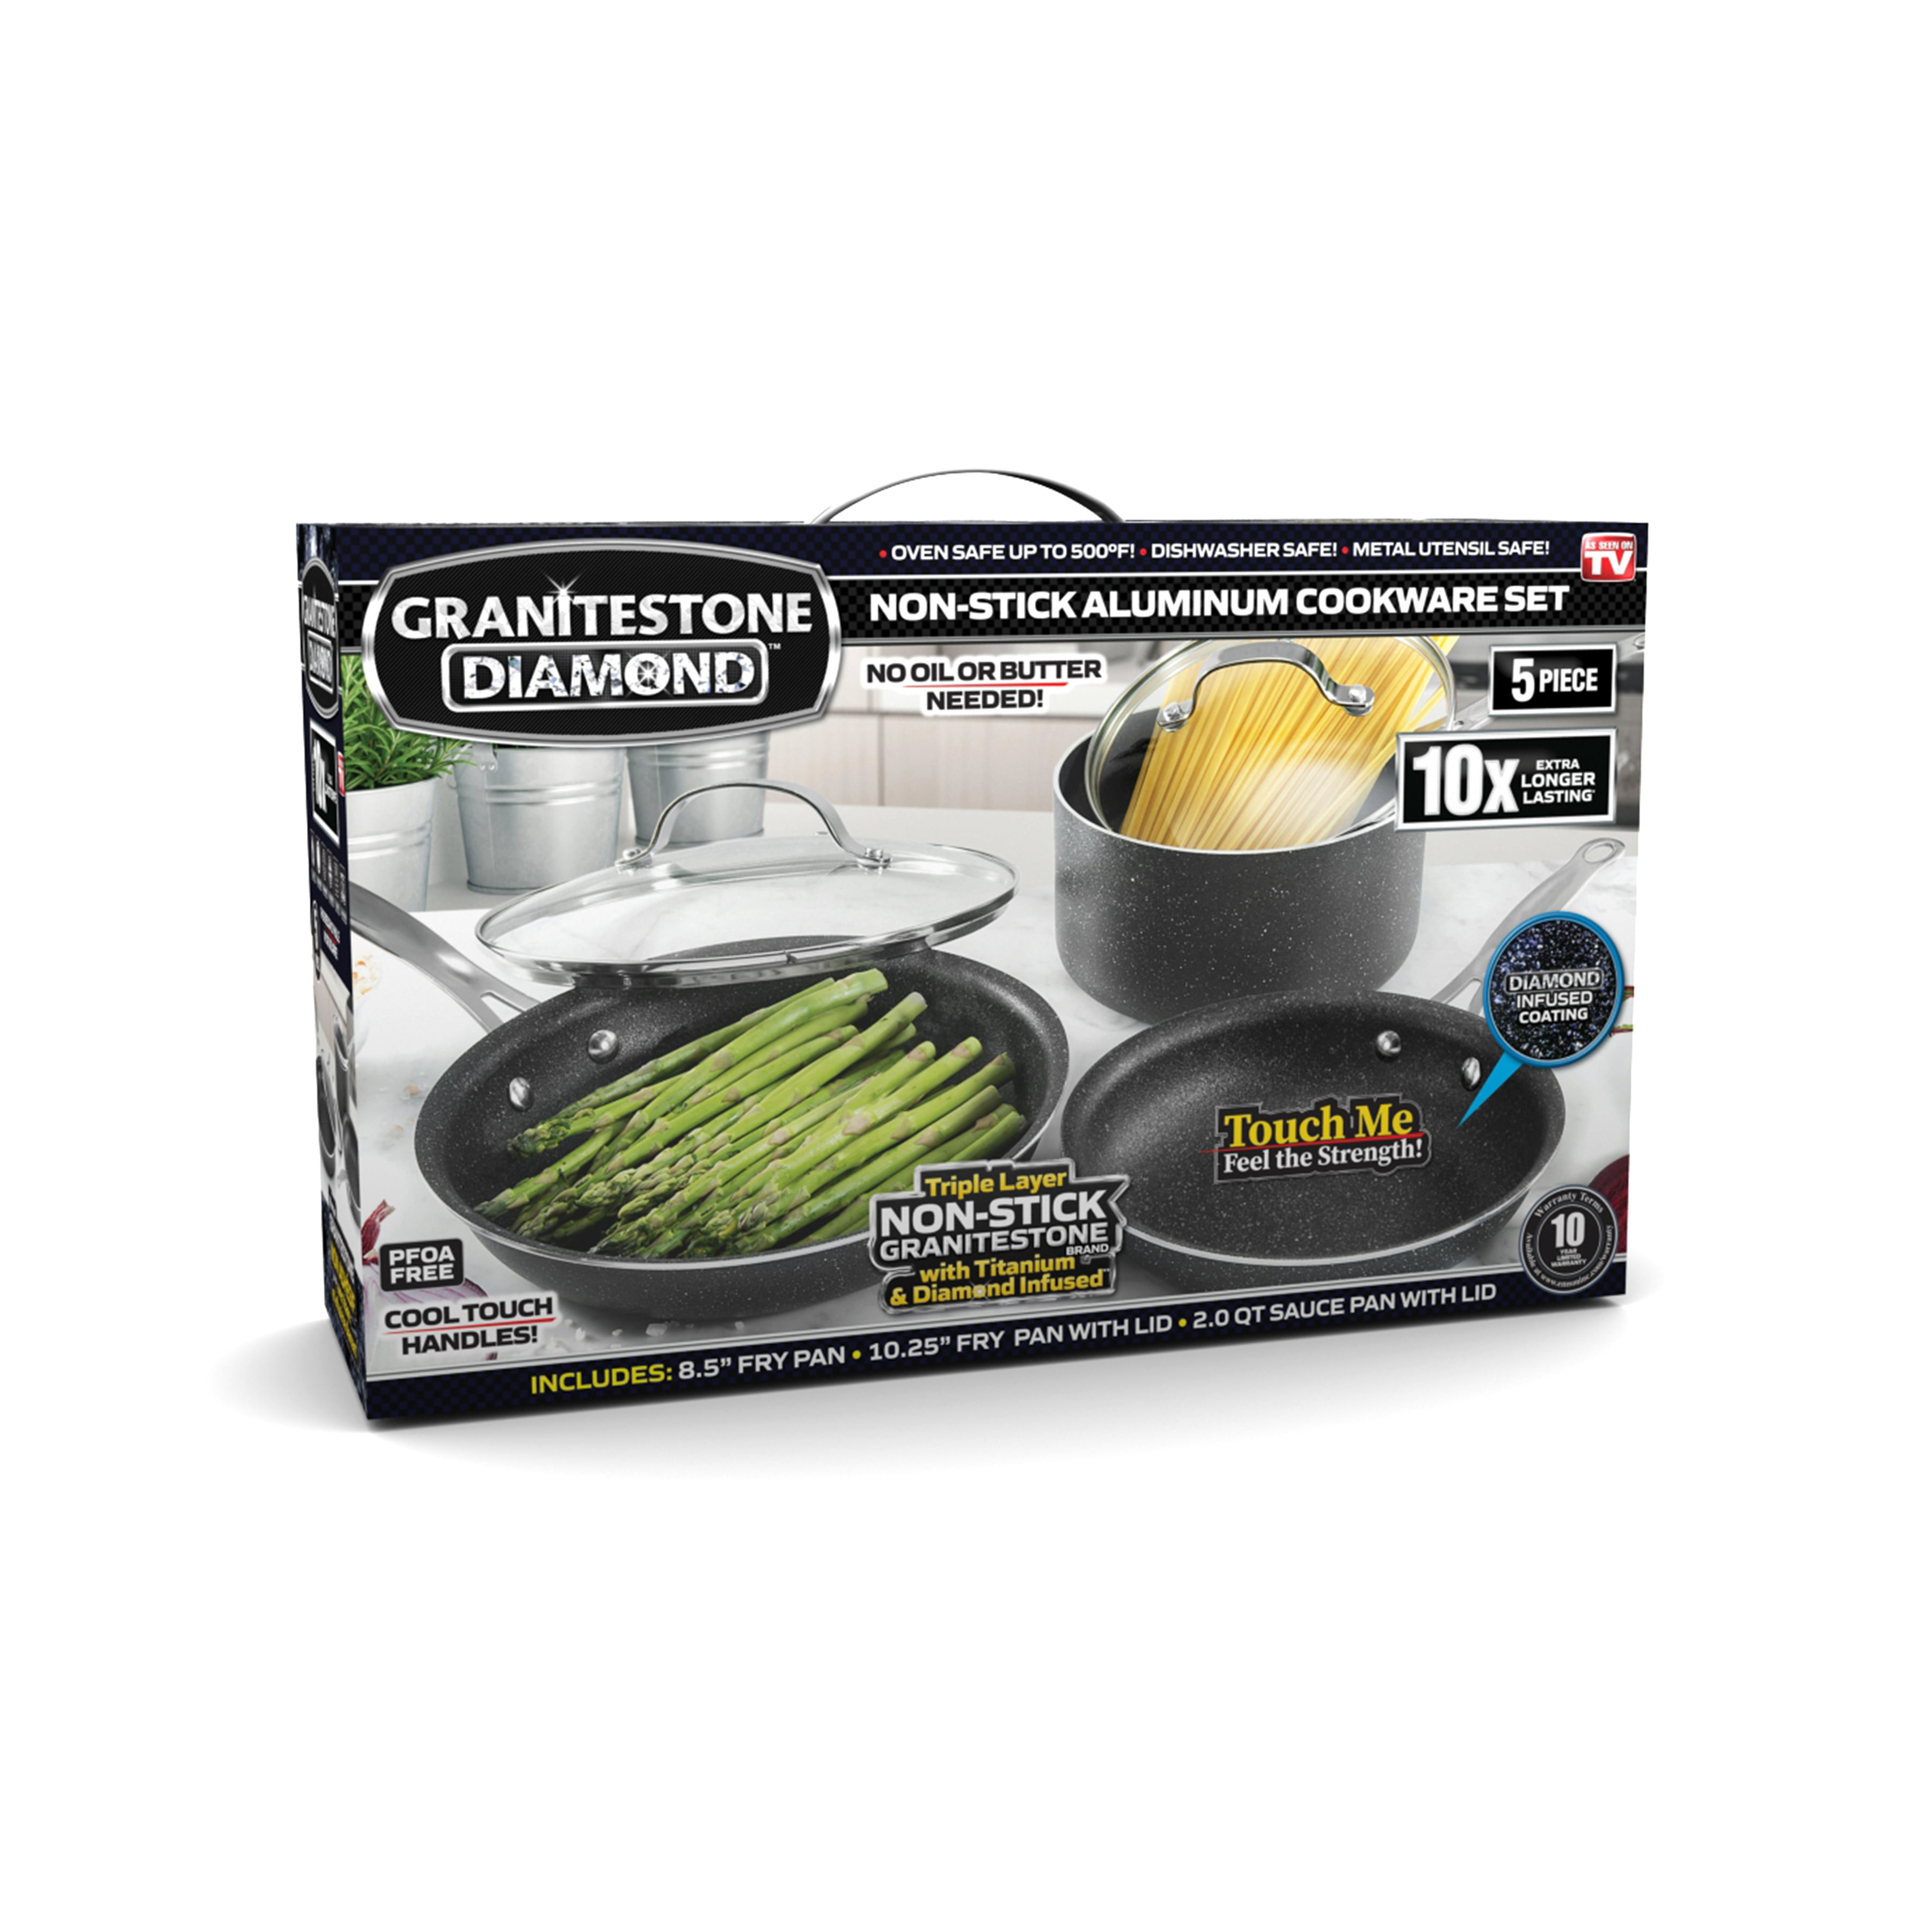 As Seen on TV! Granite Rock Ultimate Nonstick 5 Piece Kitchen Cookware Set